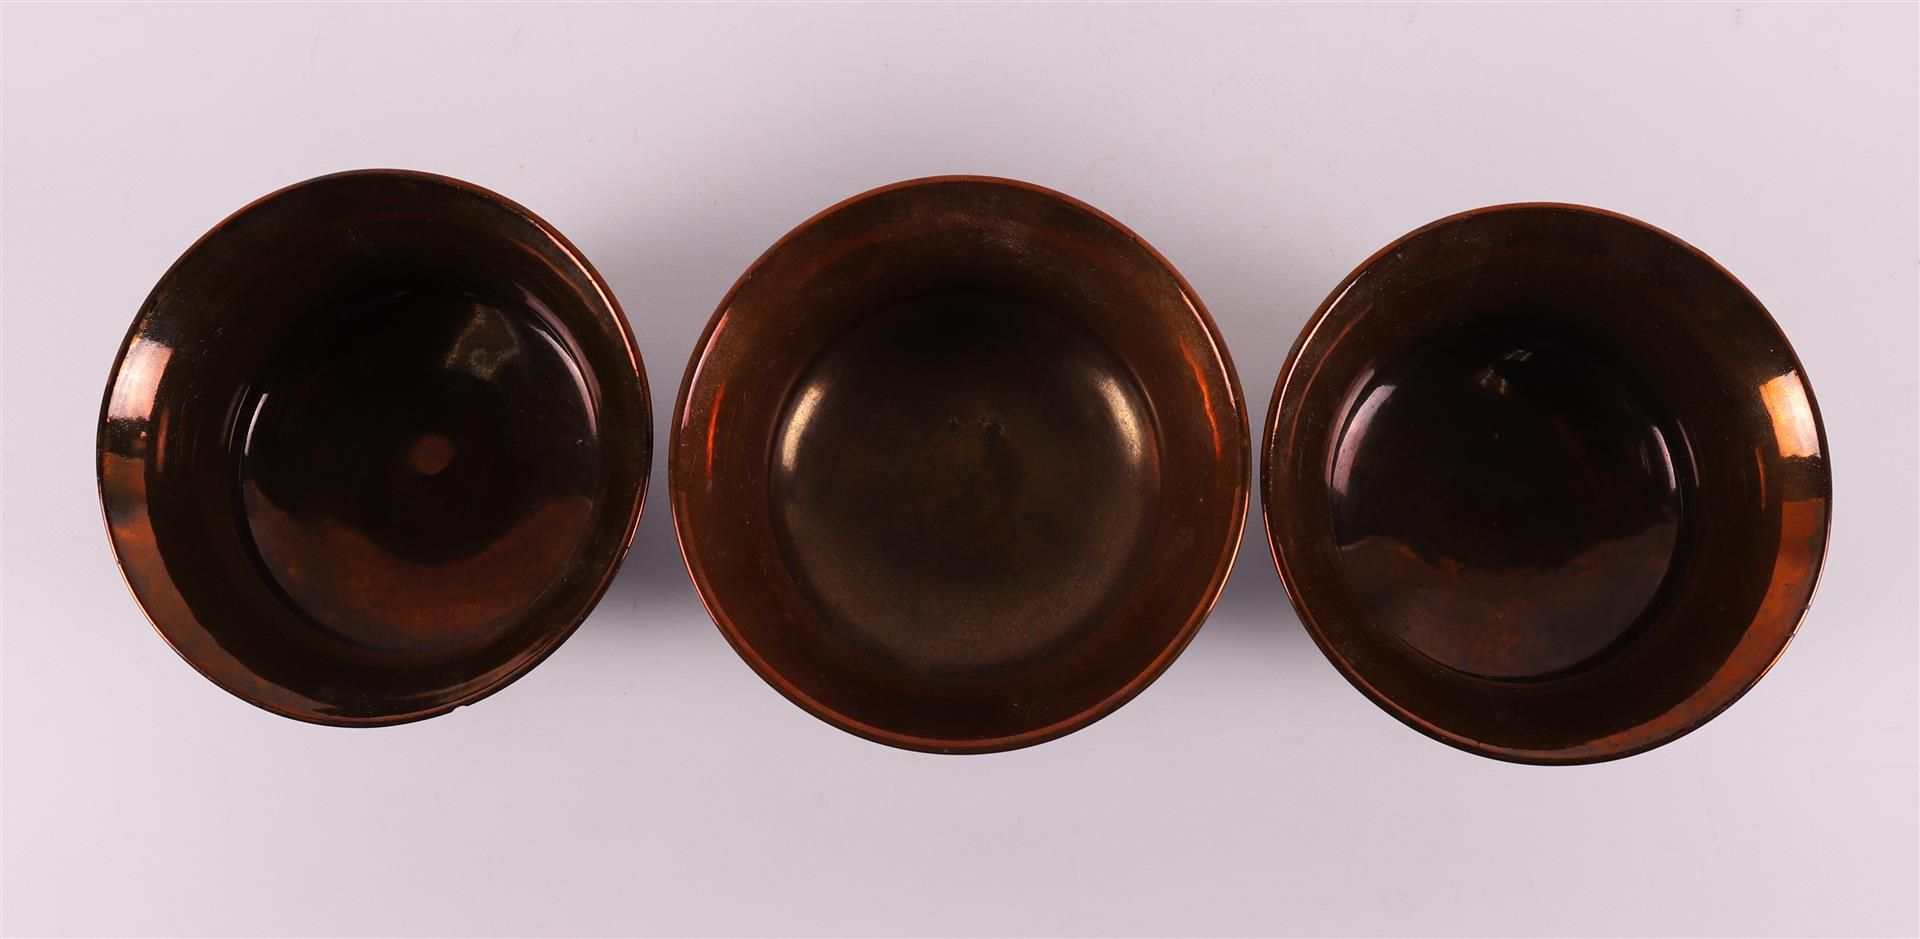 Three so-called goldstone bowls, England, Staffordshire, 2nd half 19th century. - Bild 3 aus 4